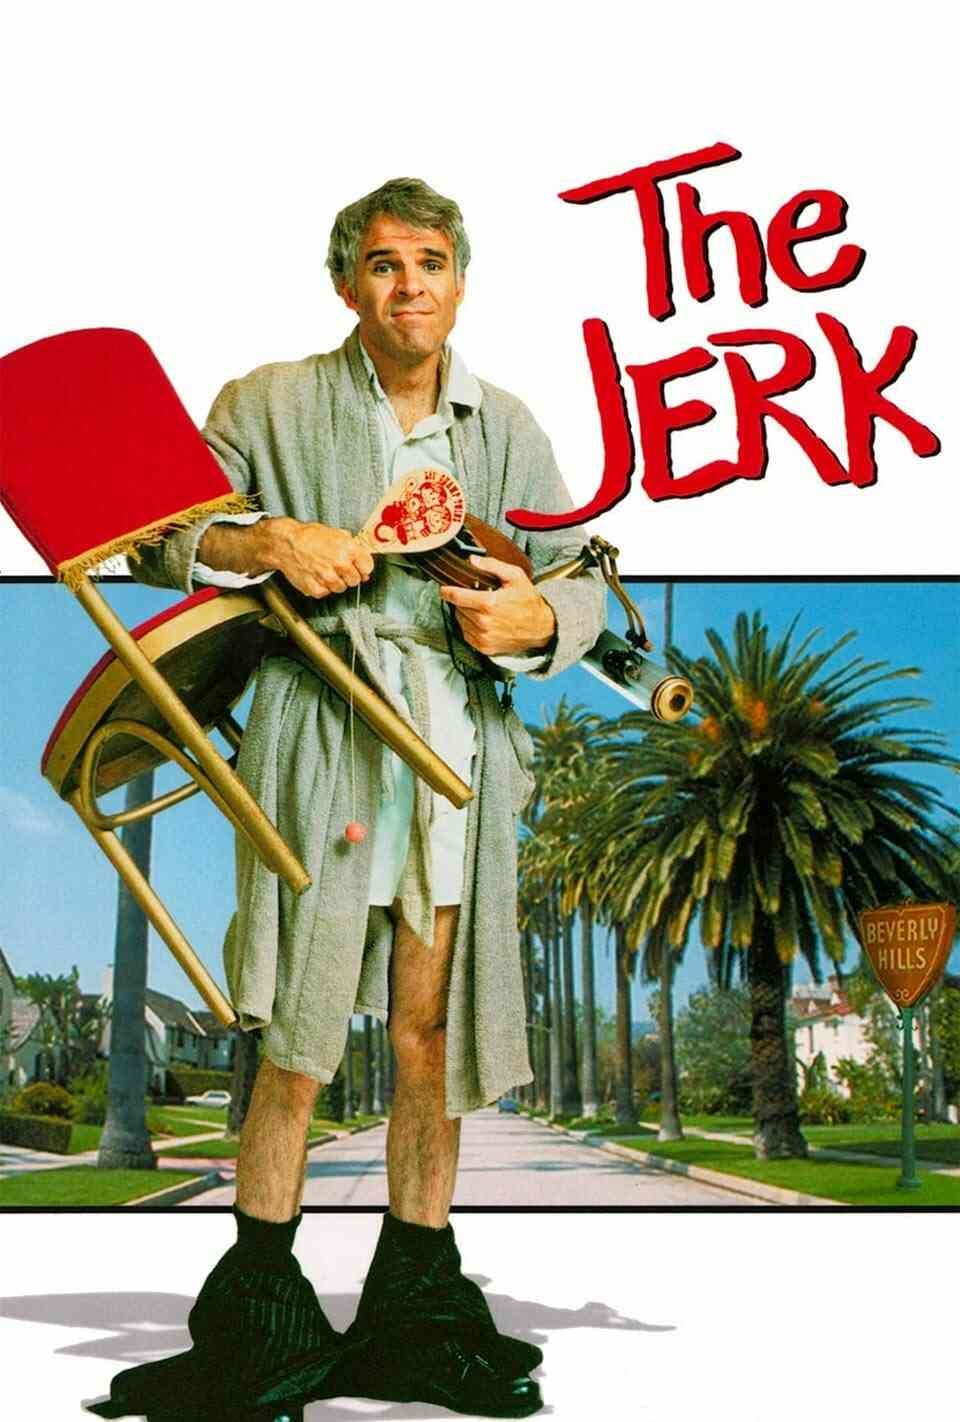 Read The Jerk screenplay (poster)